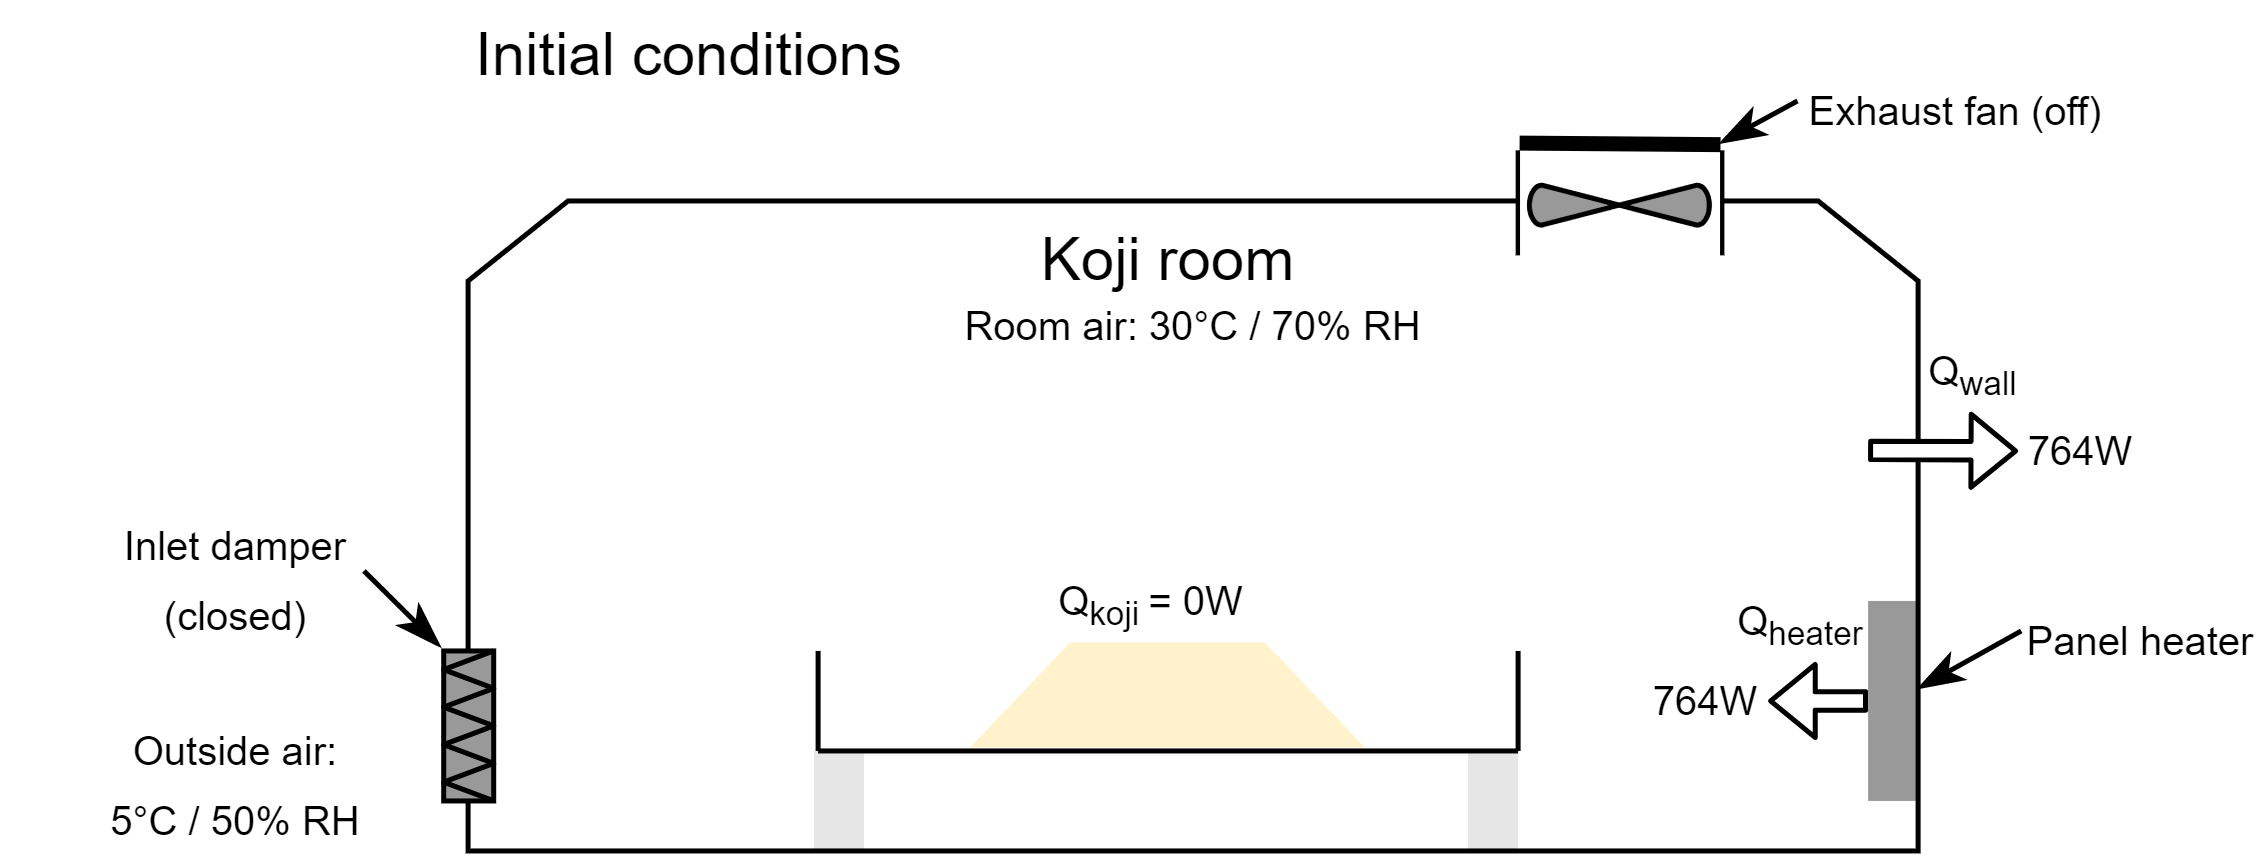 Heat balance of the koji room immediately after inoculation